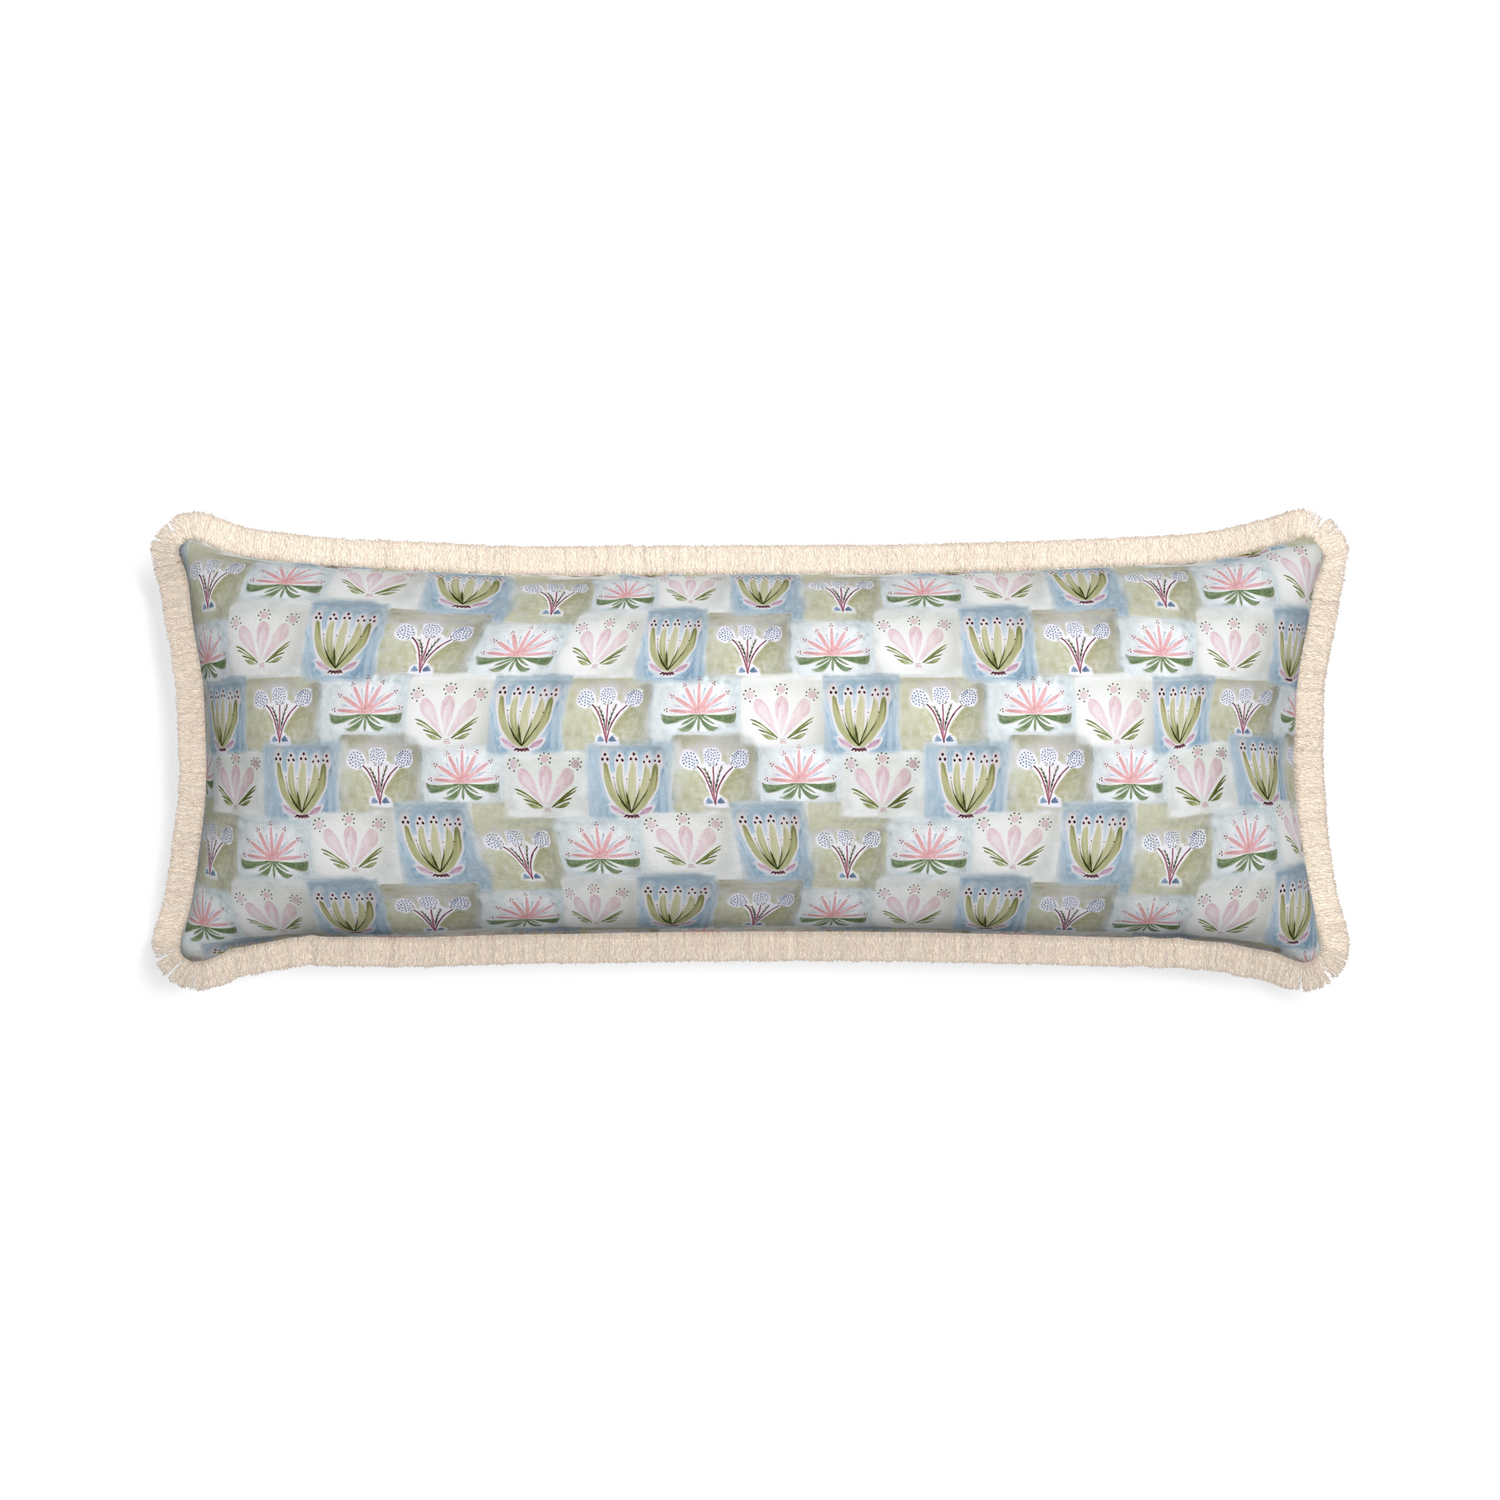 Xl-lumbar harper custom pillow with cream fringe on white background